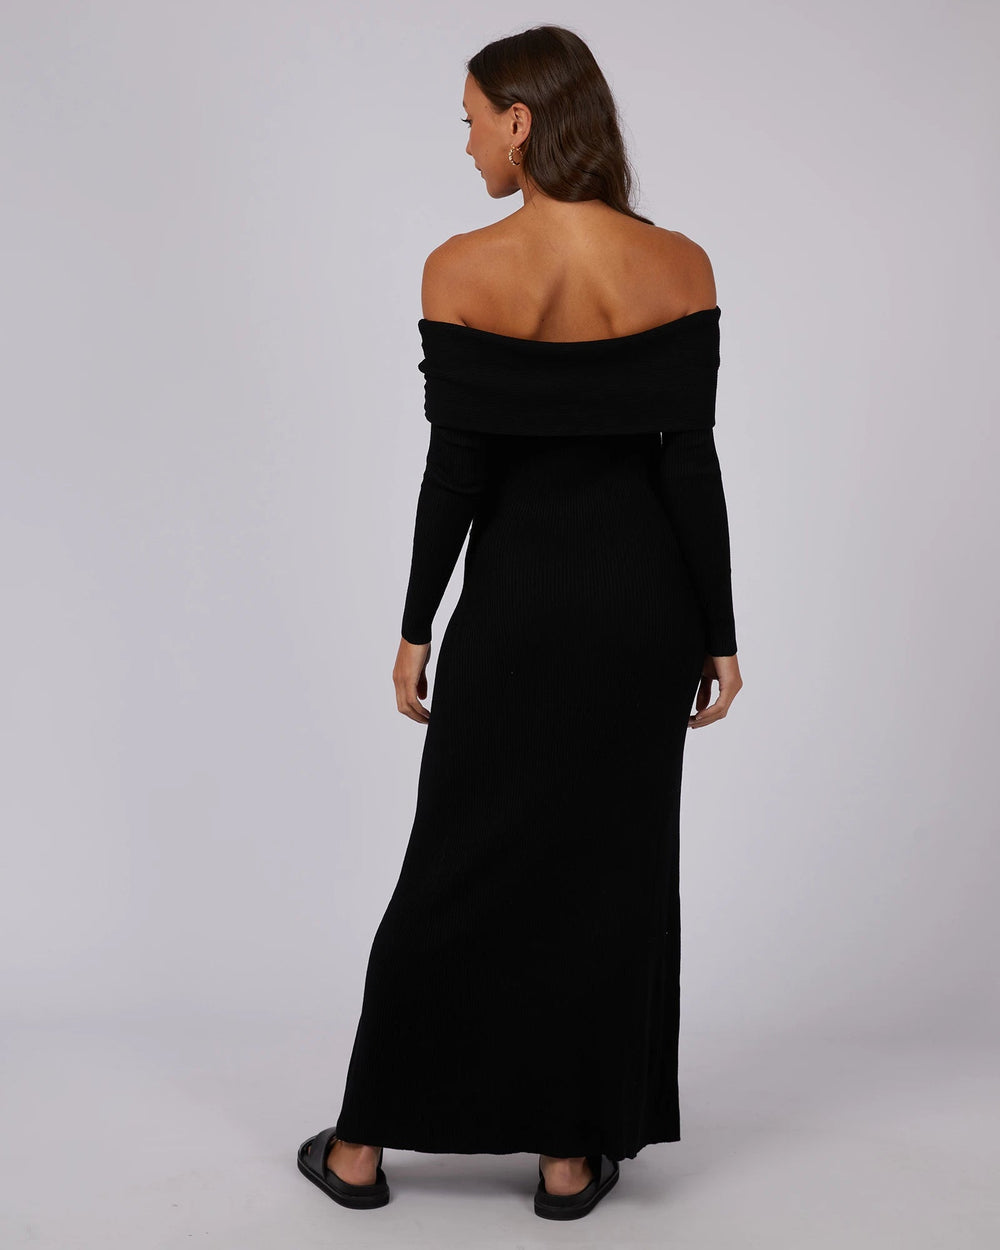 Livia Dress - Black - Chillis & More NZ